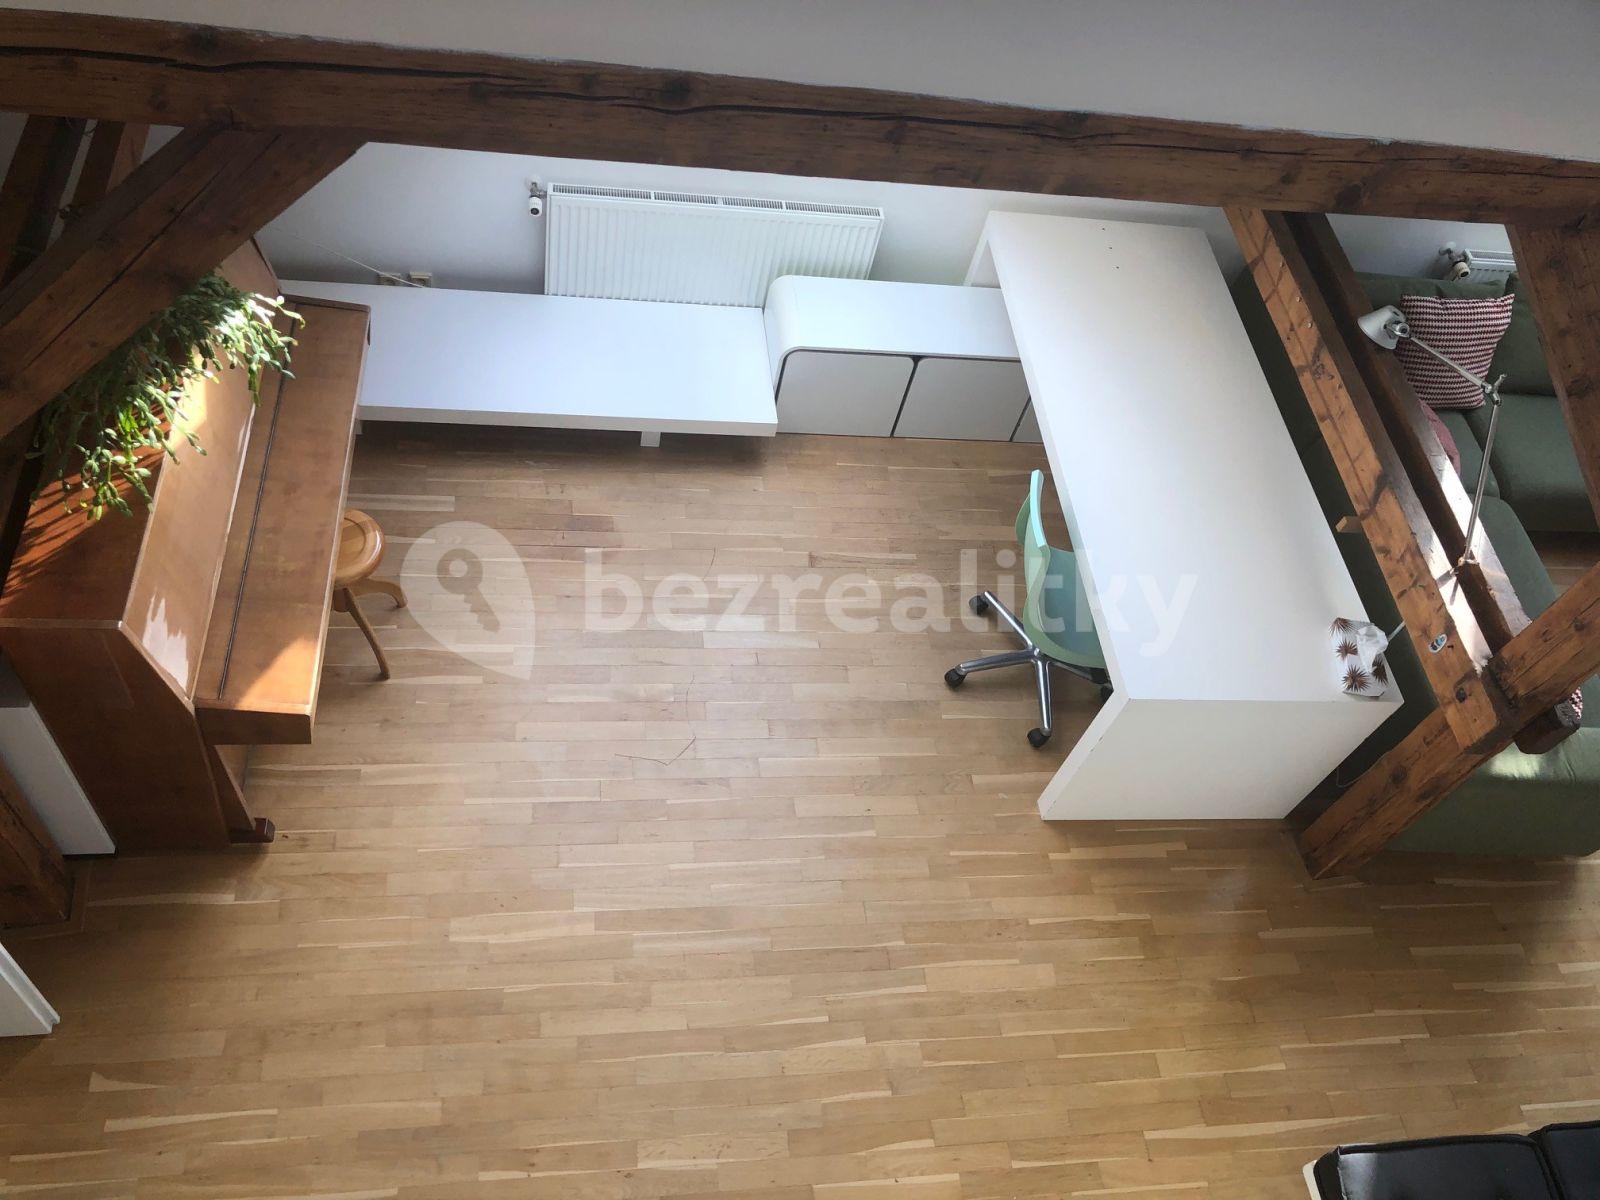 3 bedroom with open-plan kitchen flat to rent, 130 m², Čihákova, Prague, Prague